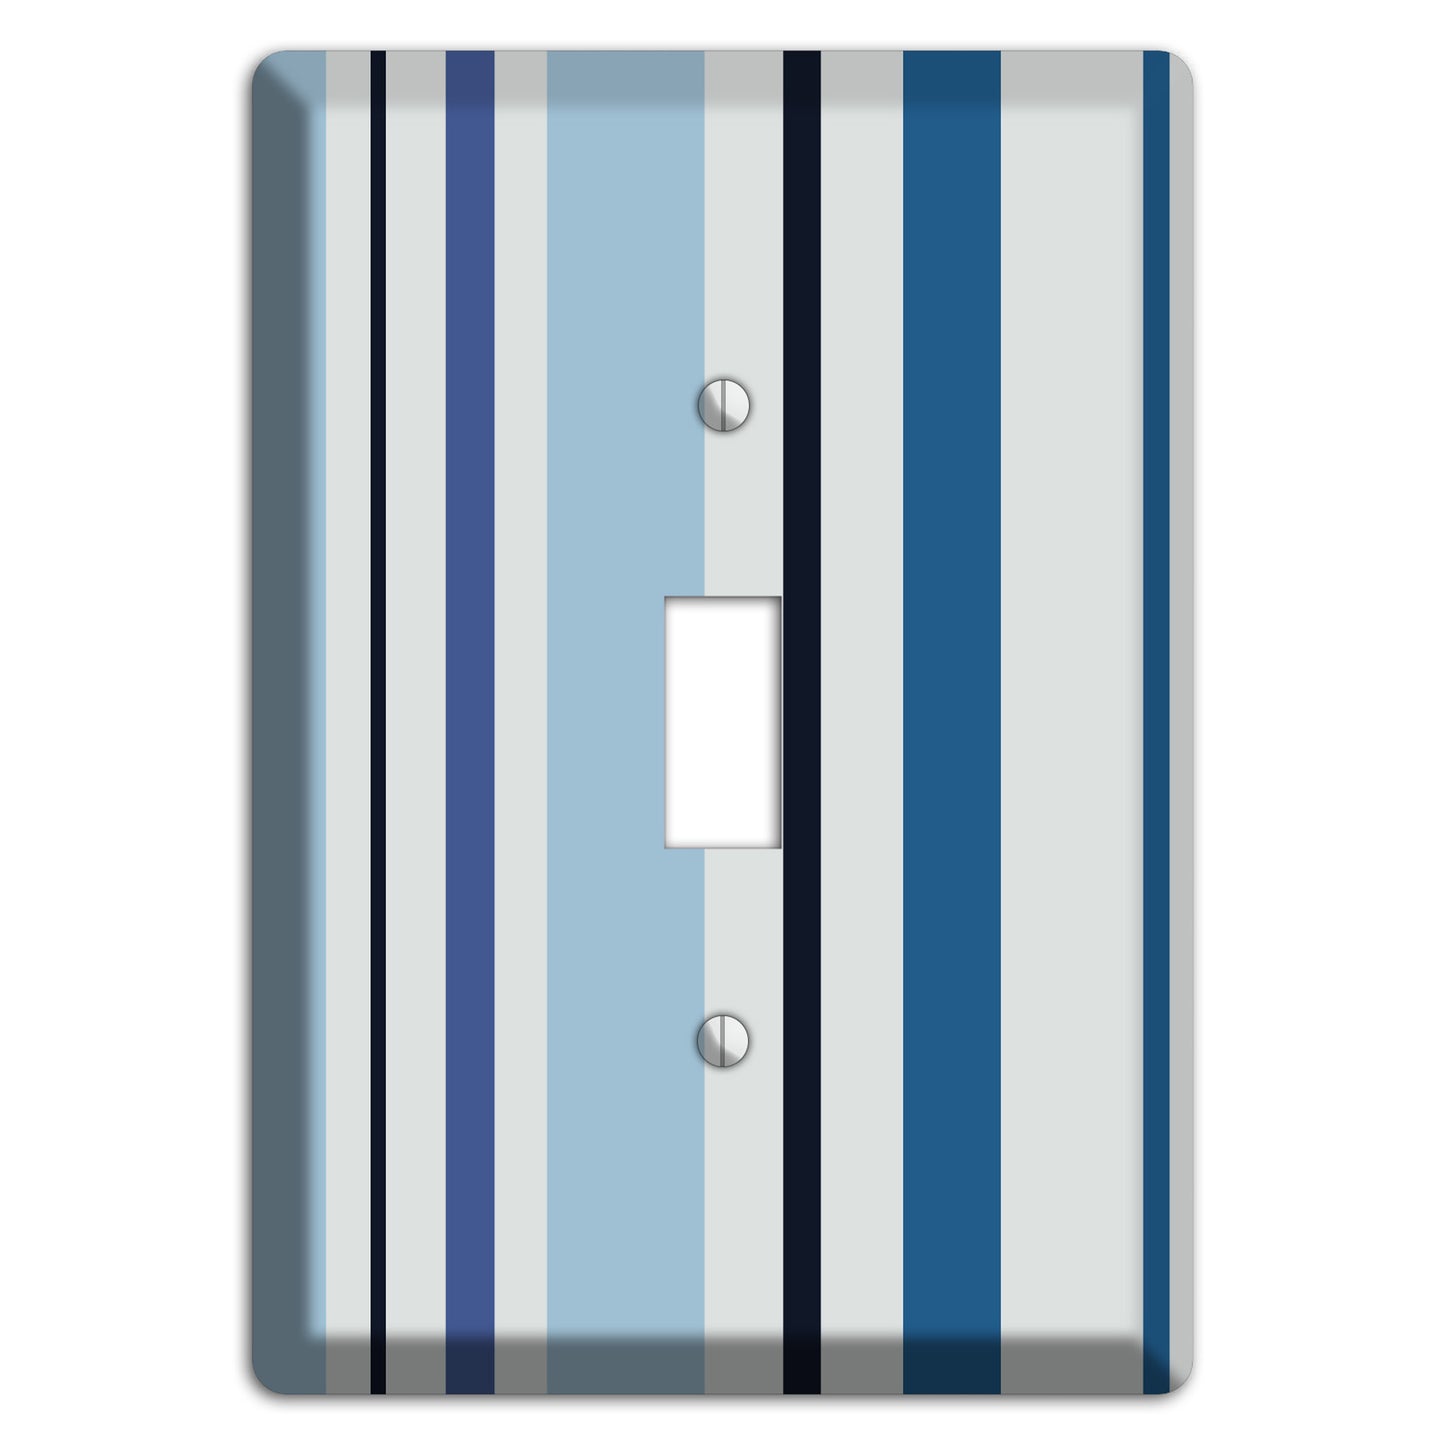 Multi White and Blue Vertical Stripe Cover Plates